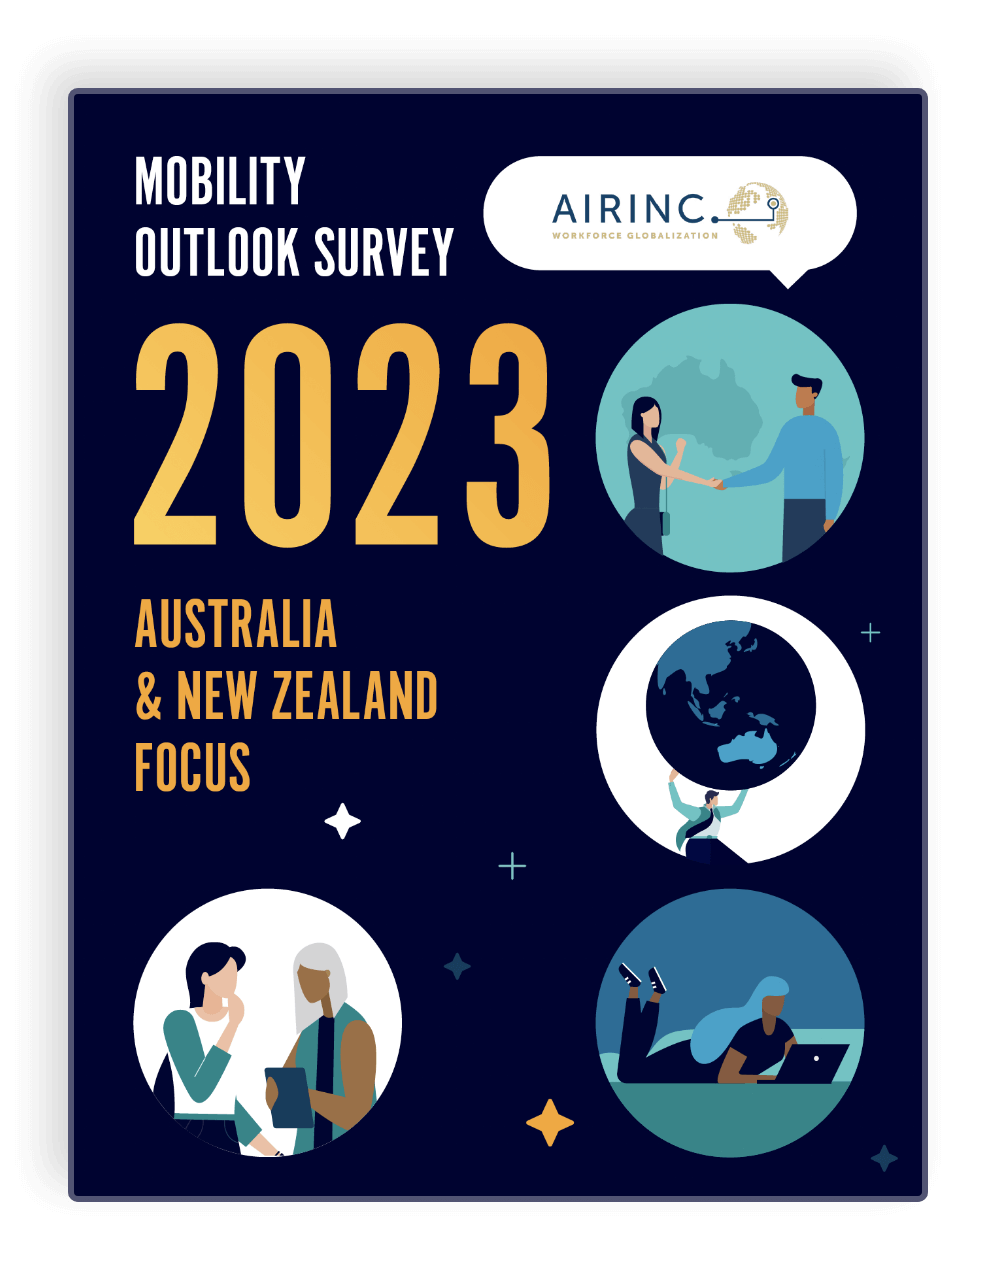 AIRINC Mobility Outlook Survey 2023 Australia & New Zealand Focus